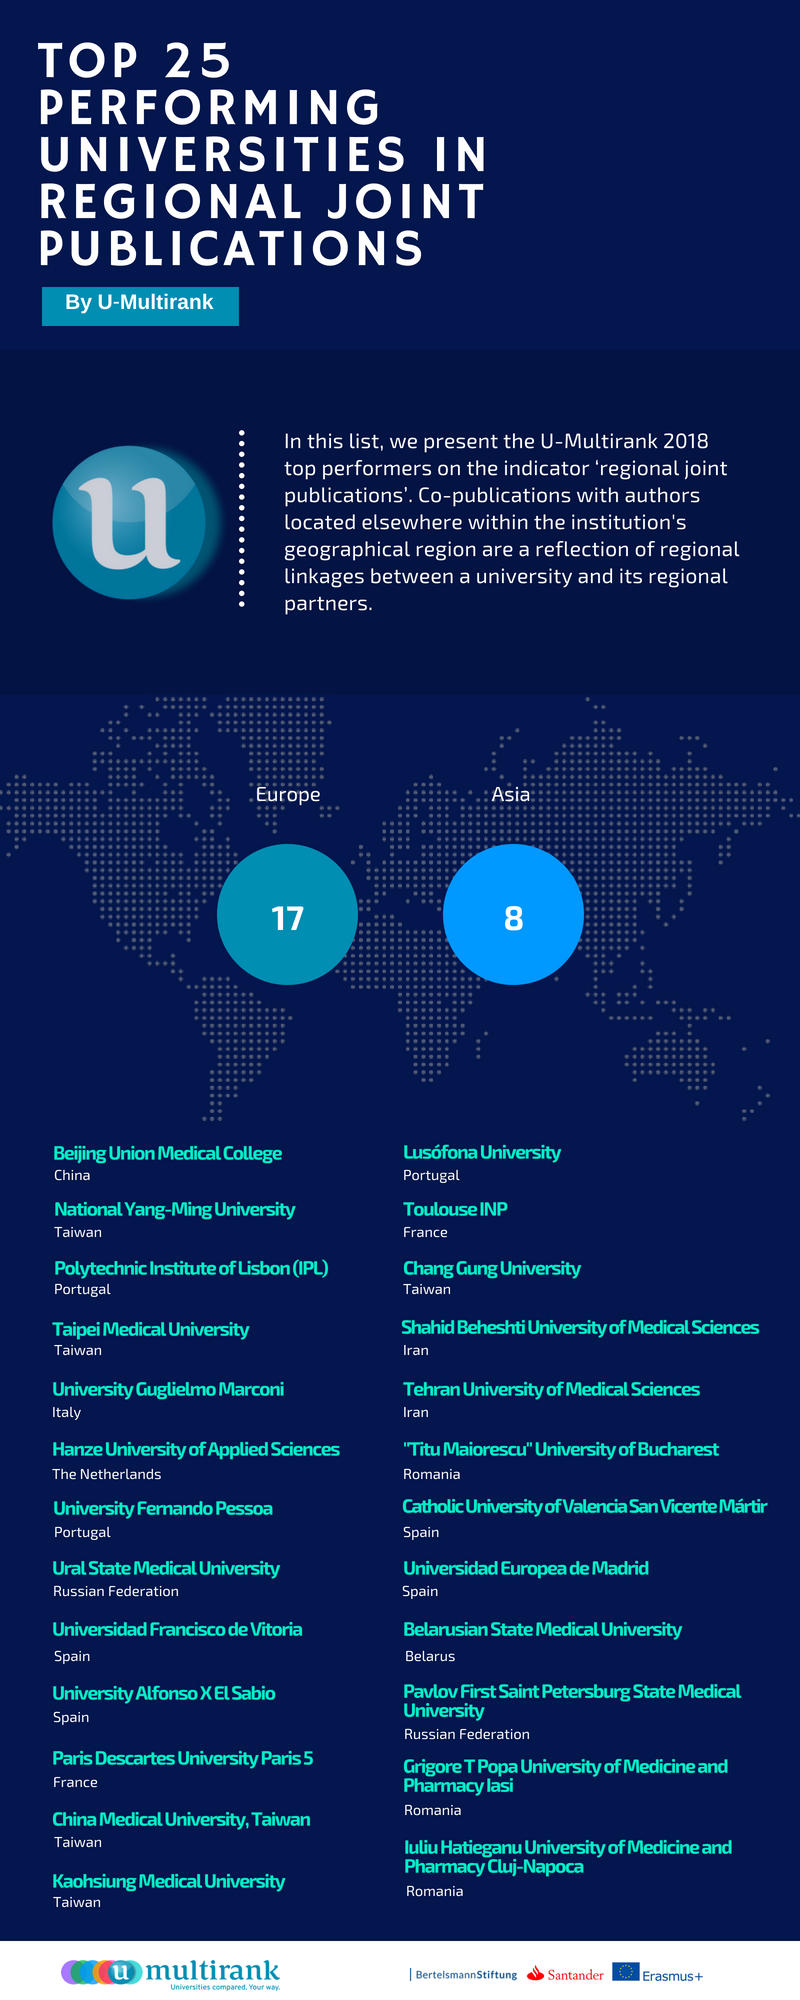 Top 25 Universities in Regional Joint Publications